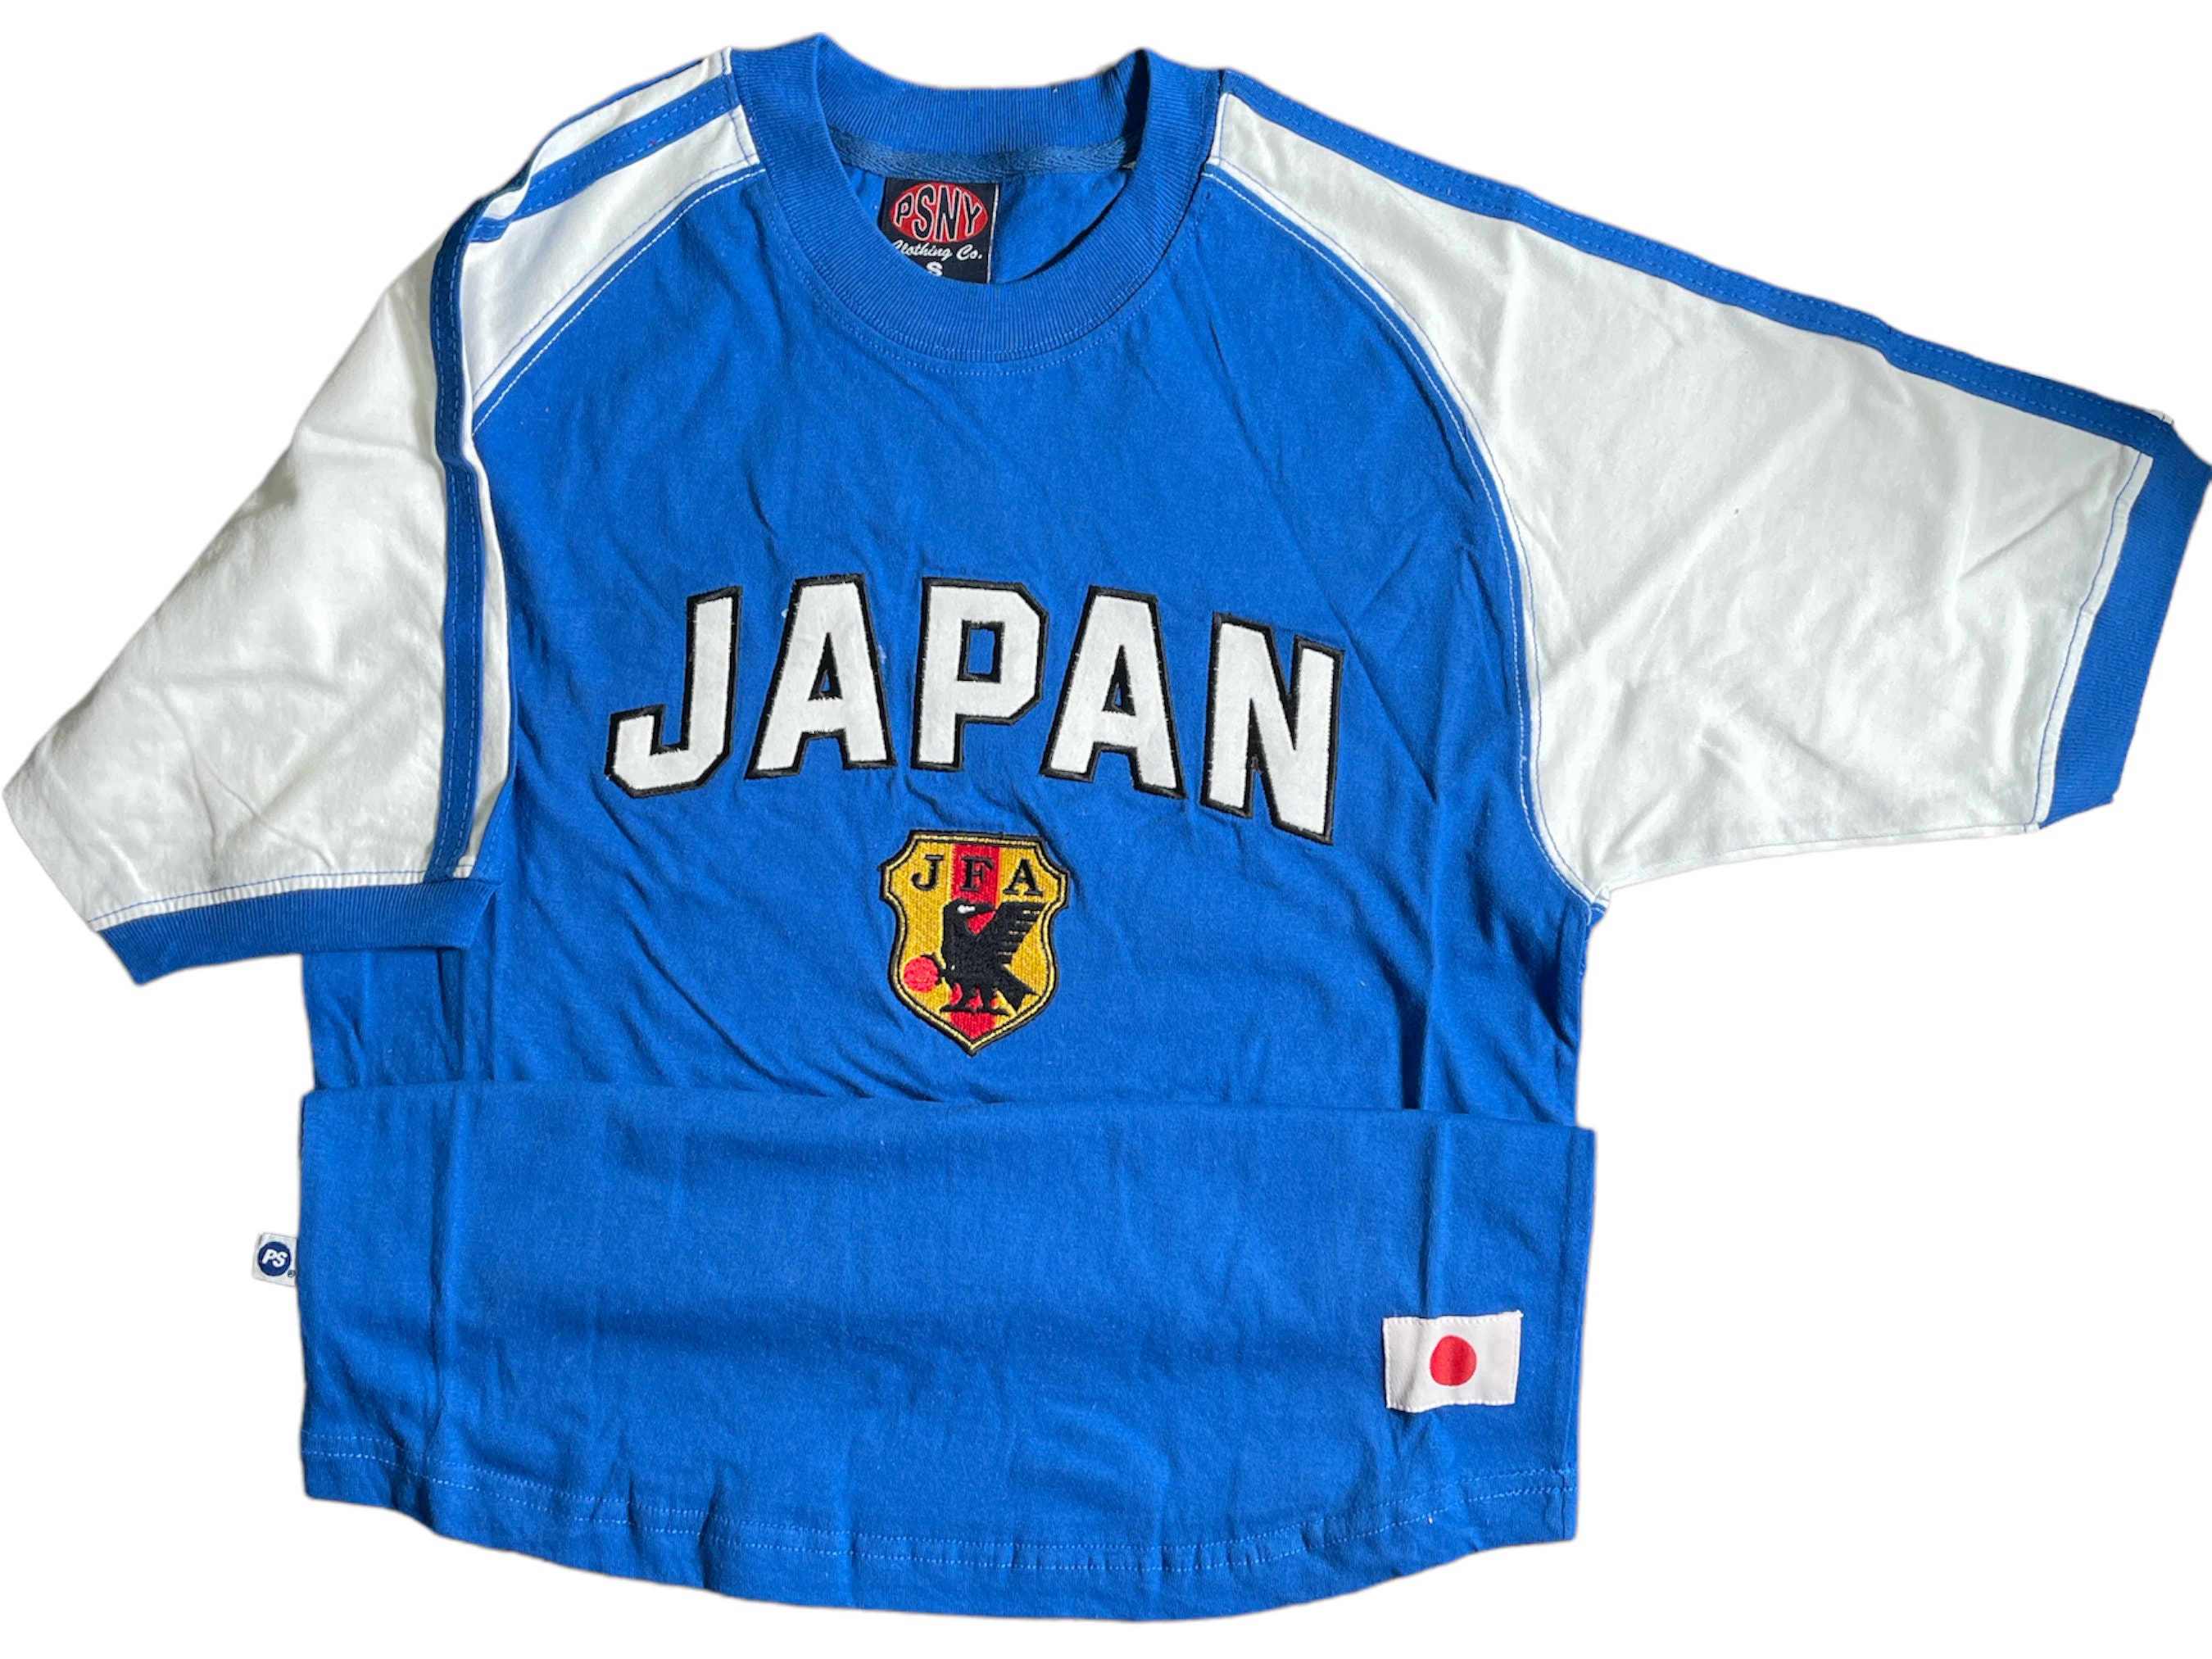 Japan shirt for sale  